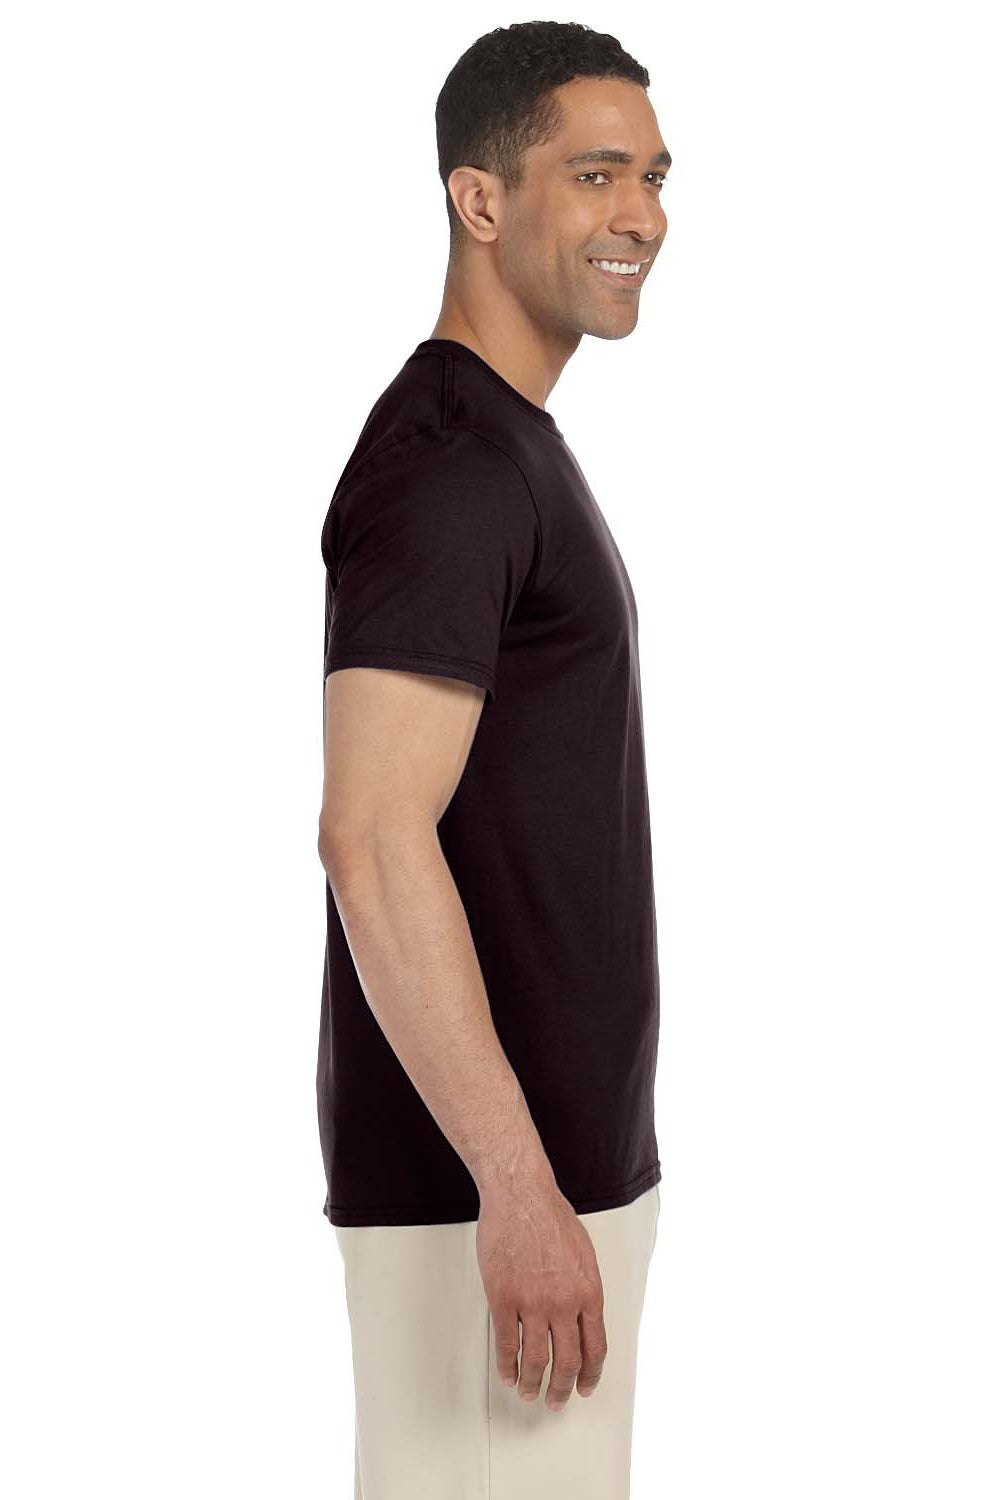 Gildan G640 Mens Softstyle Short Sleeve Crewneck T-Shirt Chocolate Brown Side